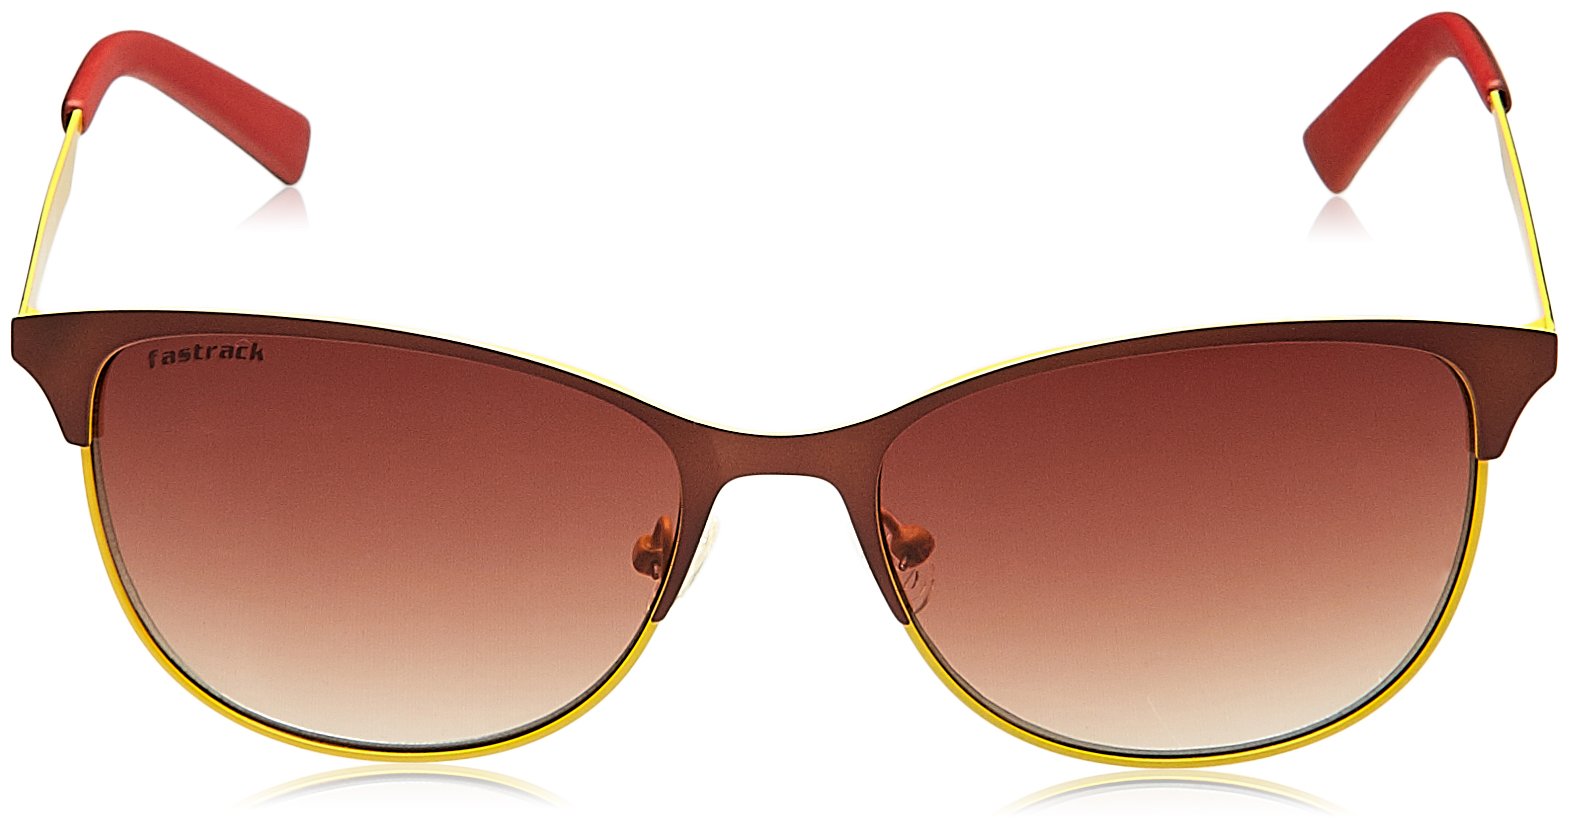 Fastrack Men's Gradient Brown Lens Round Sunglasses 